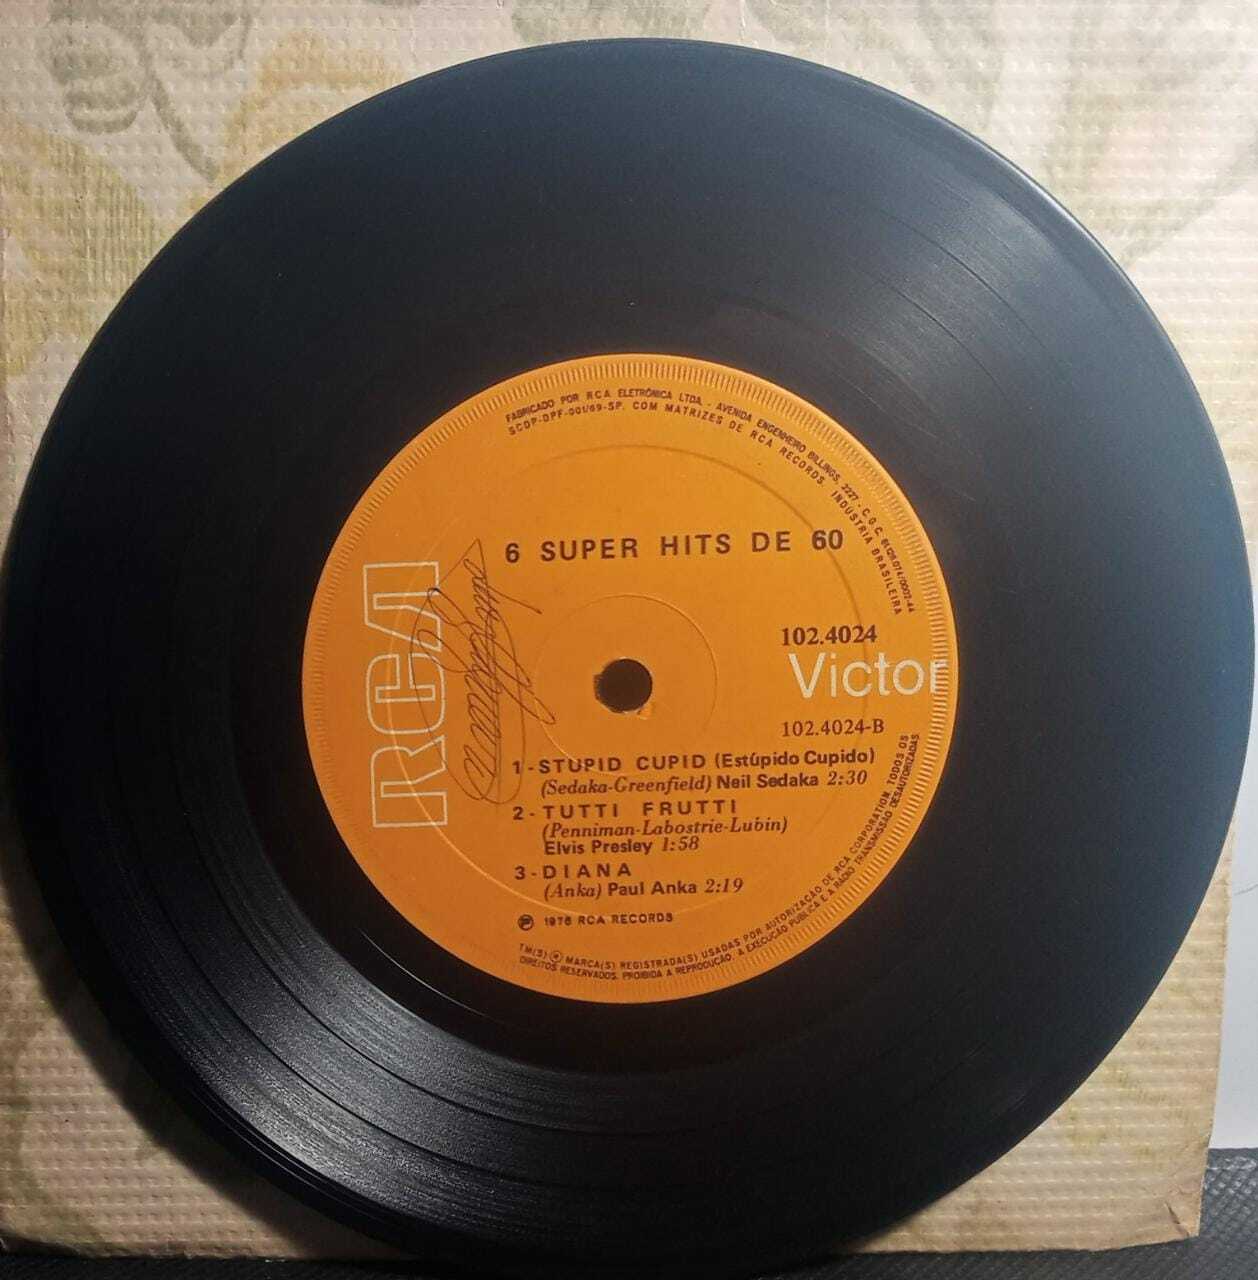 Vinil Compacto - Elvis Presley, Neil Sedaka, Paul Anka - 6 Super Hits De 60